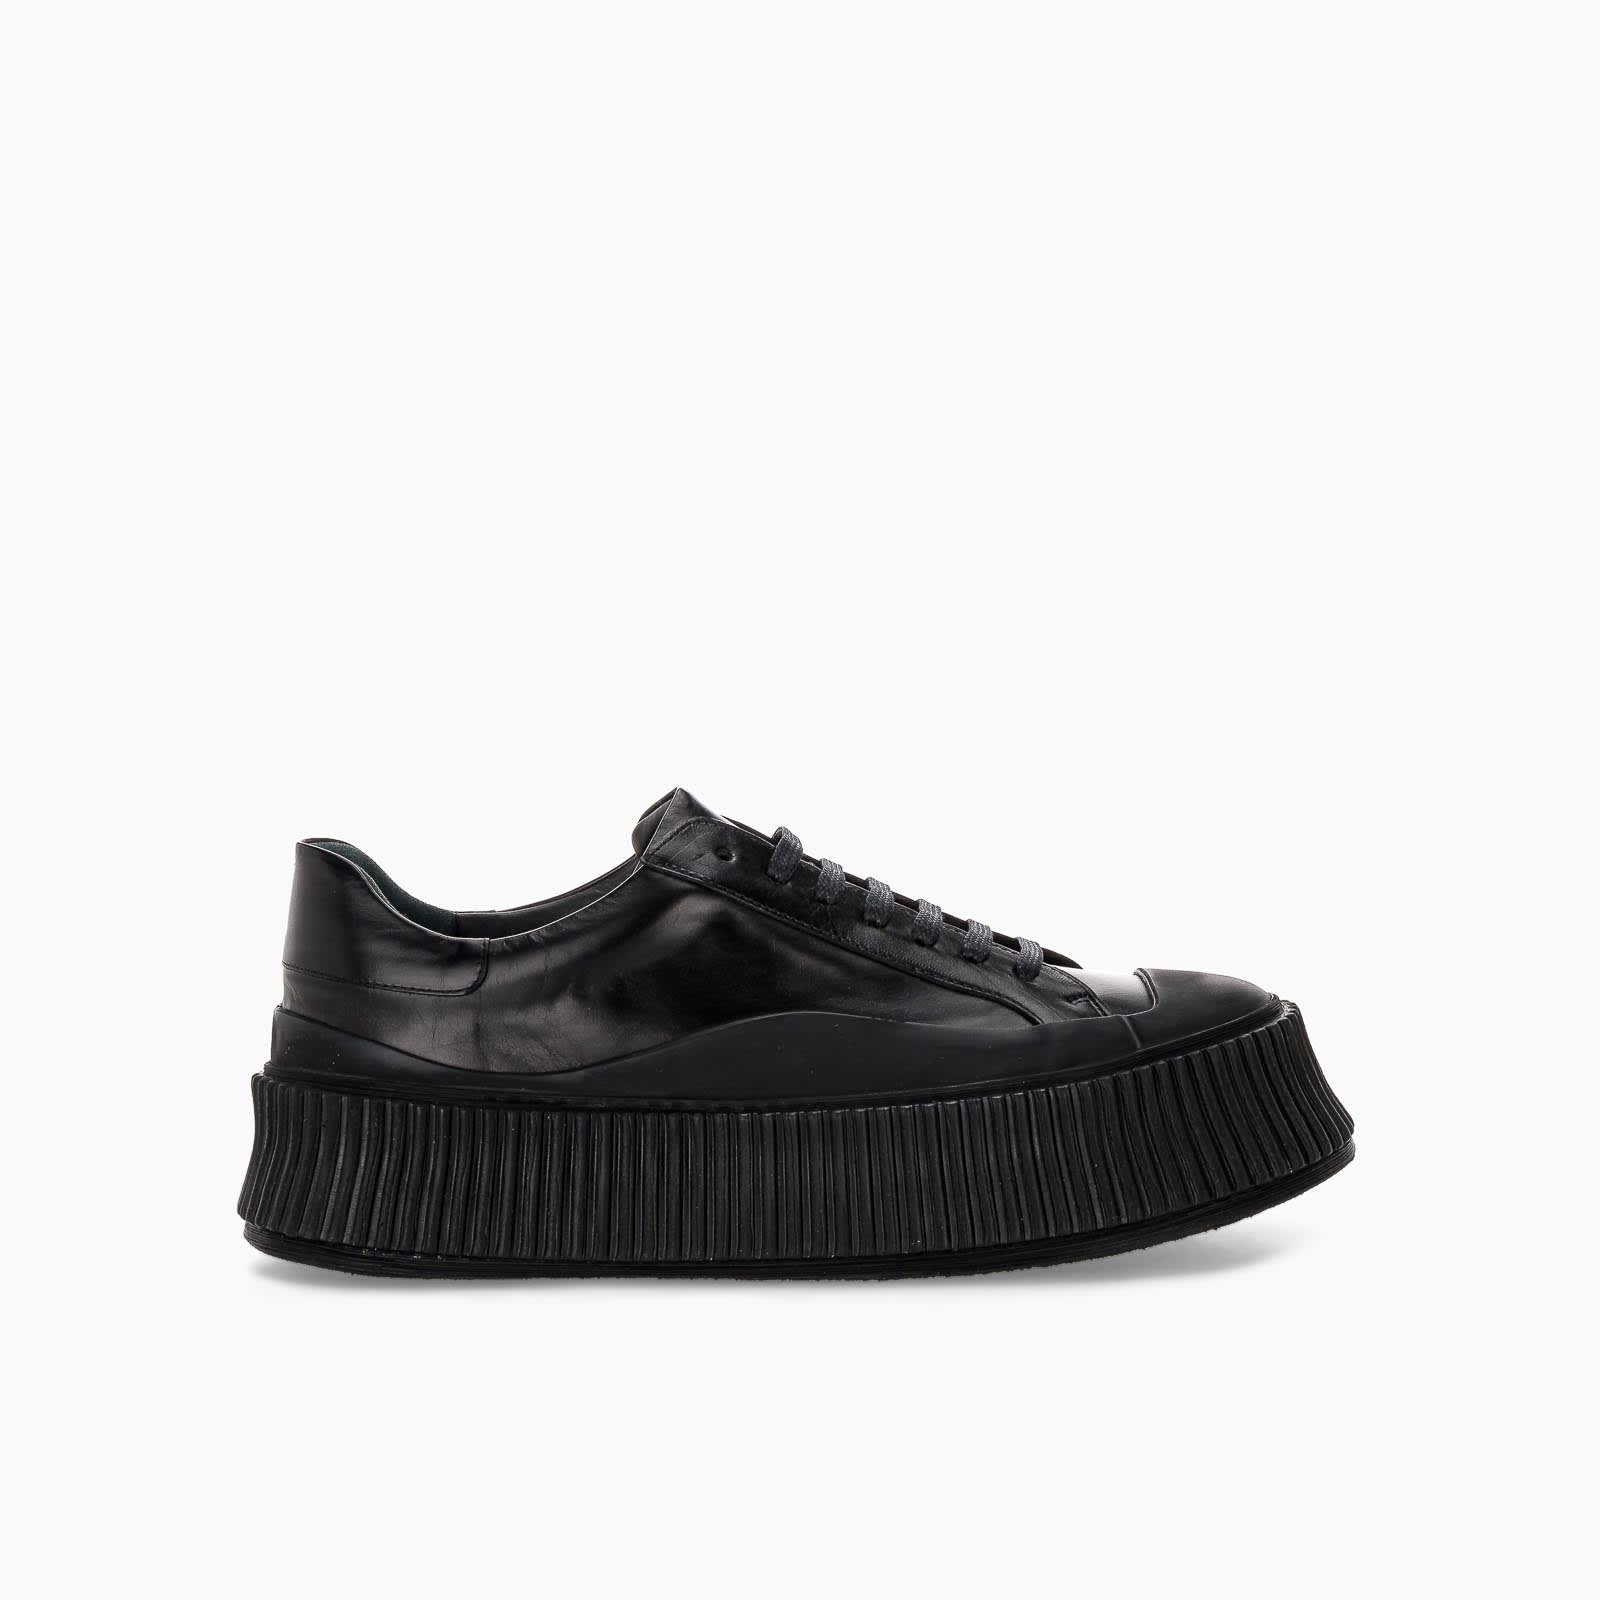 Buy Jil Sander Black Leather Low Top Sneaker online, shop Jil Sander shoes with free shipping